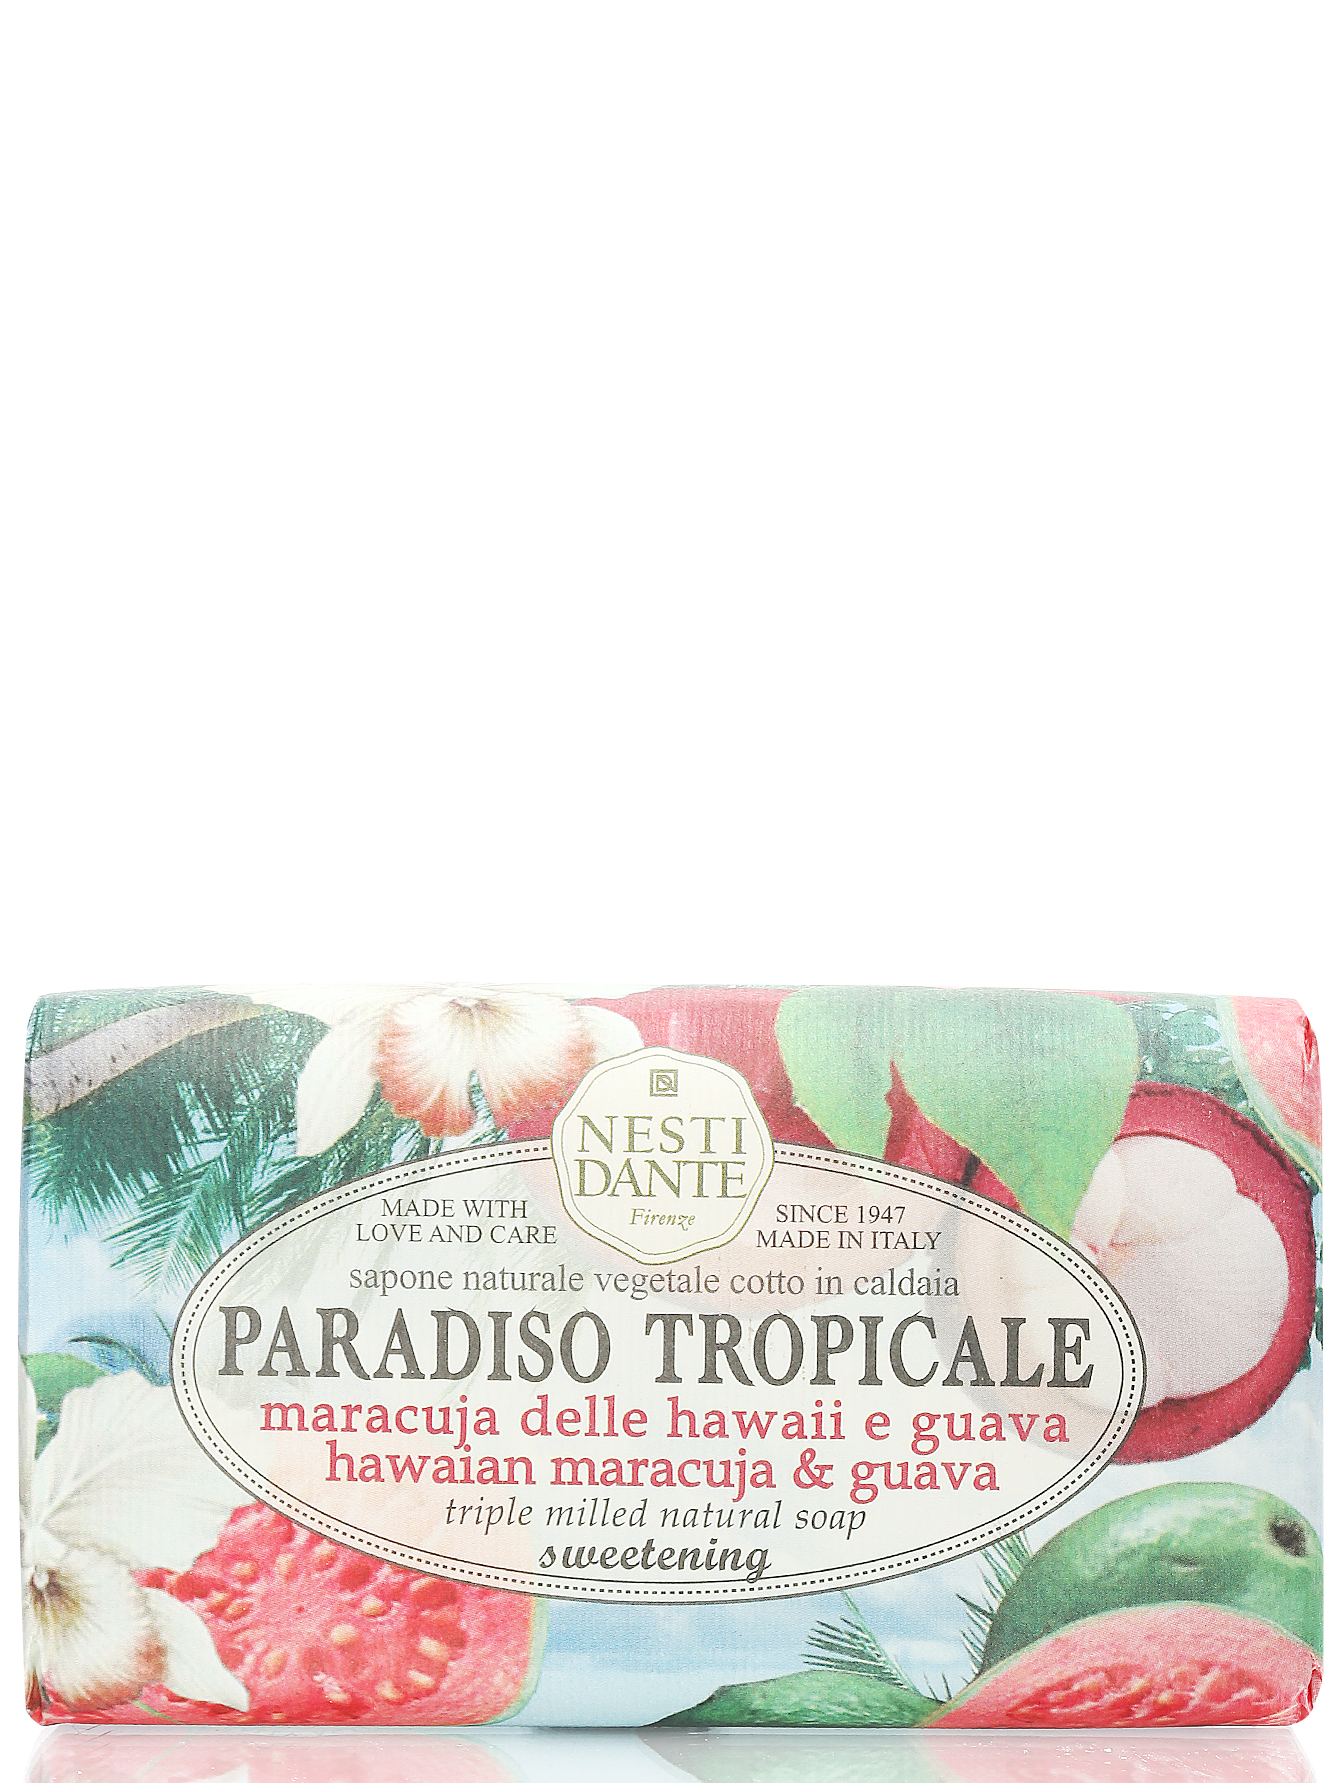 Мыло Paradiso Tropicale, 250 г - Общий вид